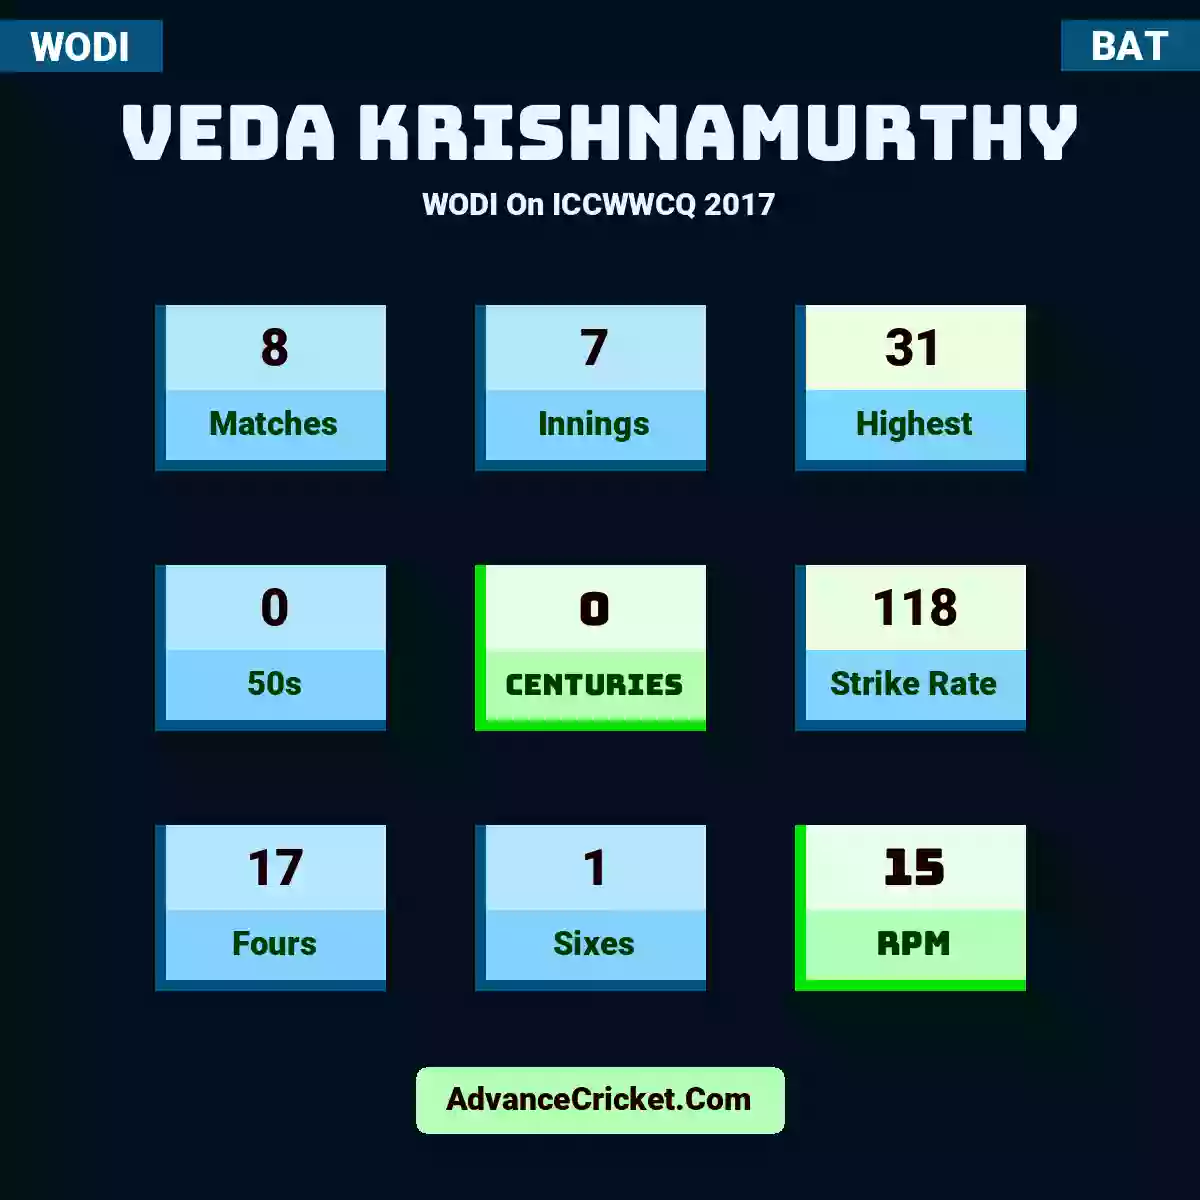 Veda Krishnamurthy WODI  On ICCWWCQ 2017, Veda Krishnamurthy played 8 matches, scored 31 runs as highest, 0 half-centuries, and 0 centuries, with a strike rate of 118. V.Krishnamurthy hit 17 fours and 1 sixes, with an RPM of 15.